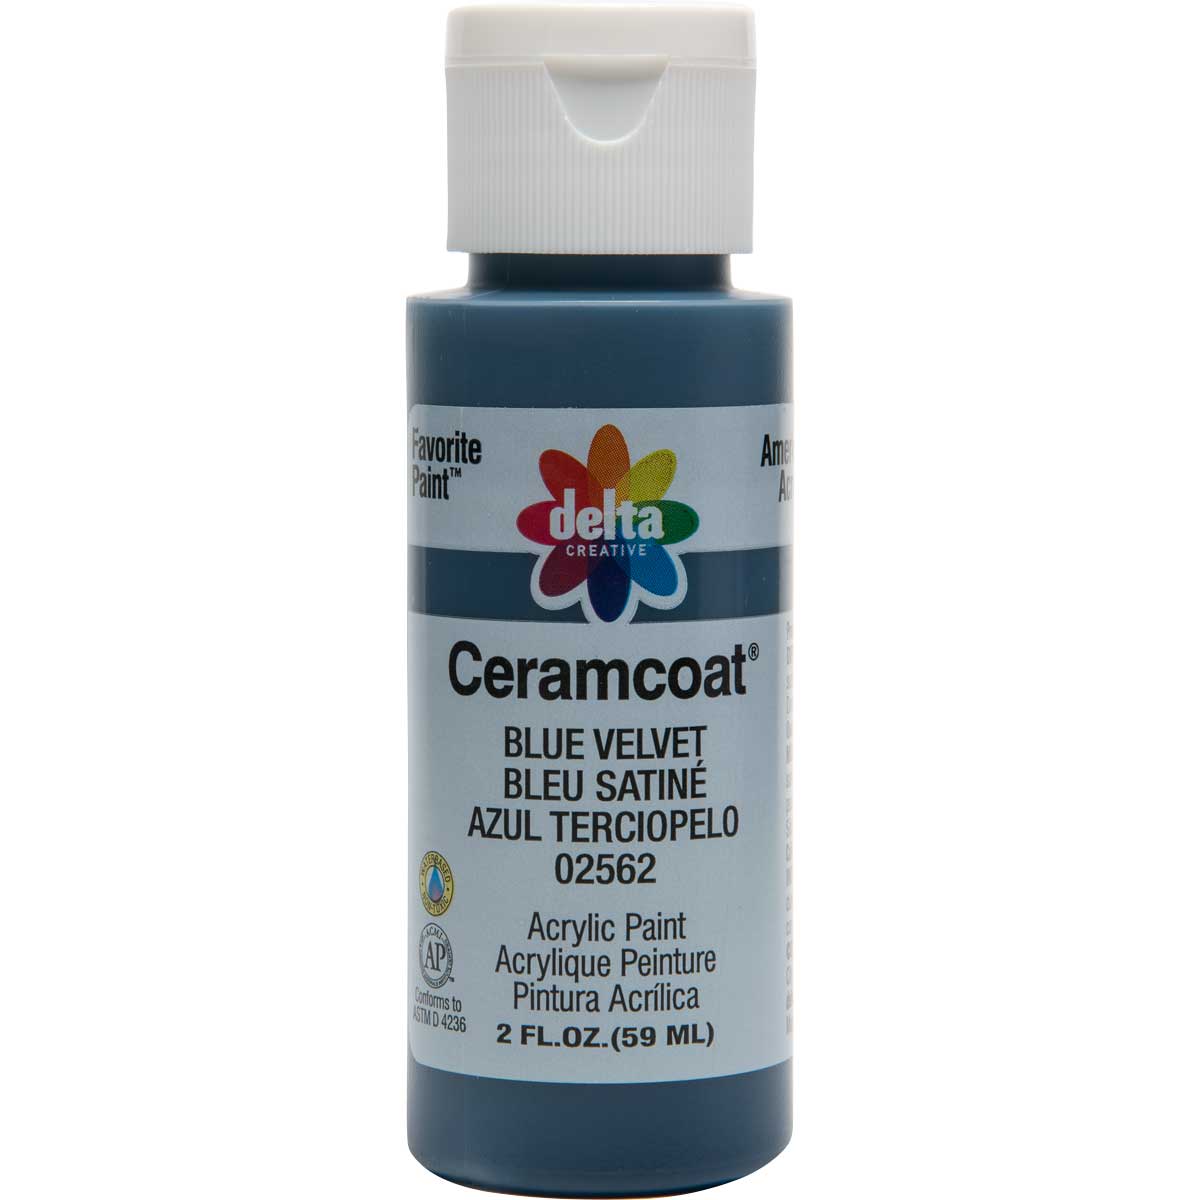 Delta Ceramcoat Acrylic Paint - Blue Velvet, 2 oz. - 025620202W